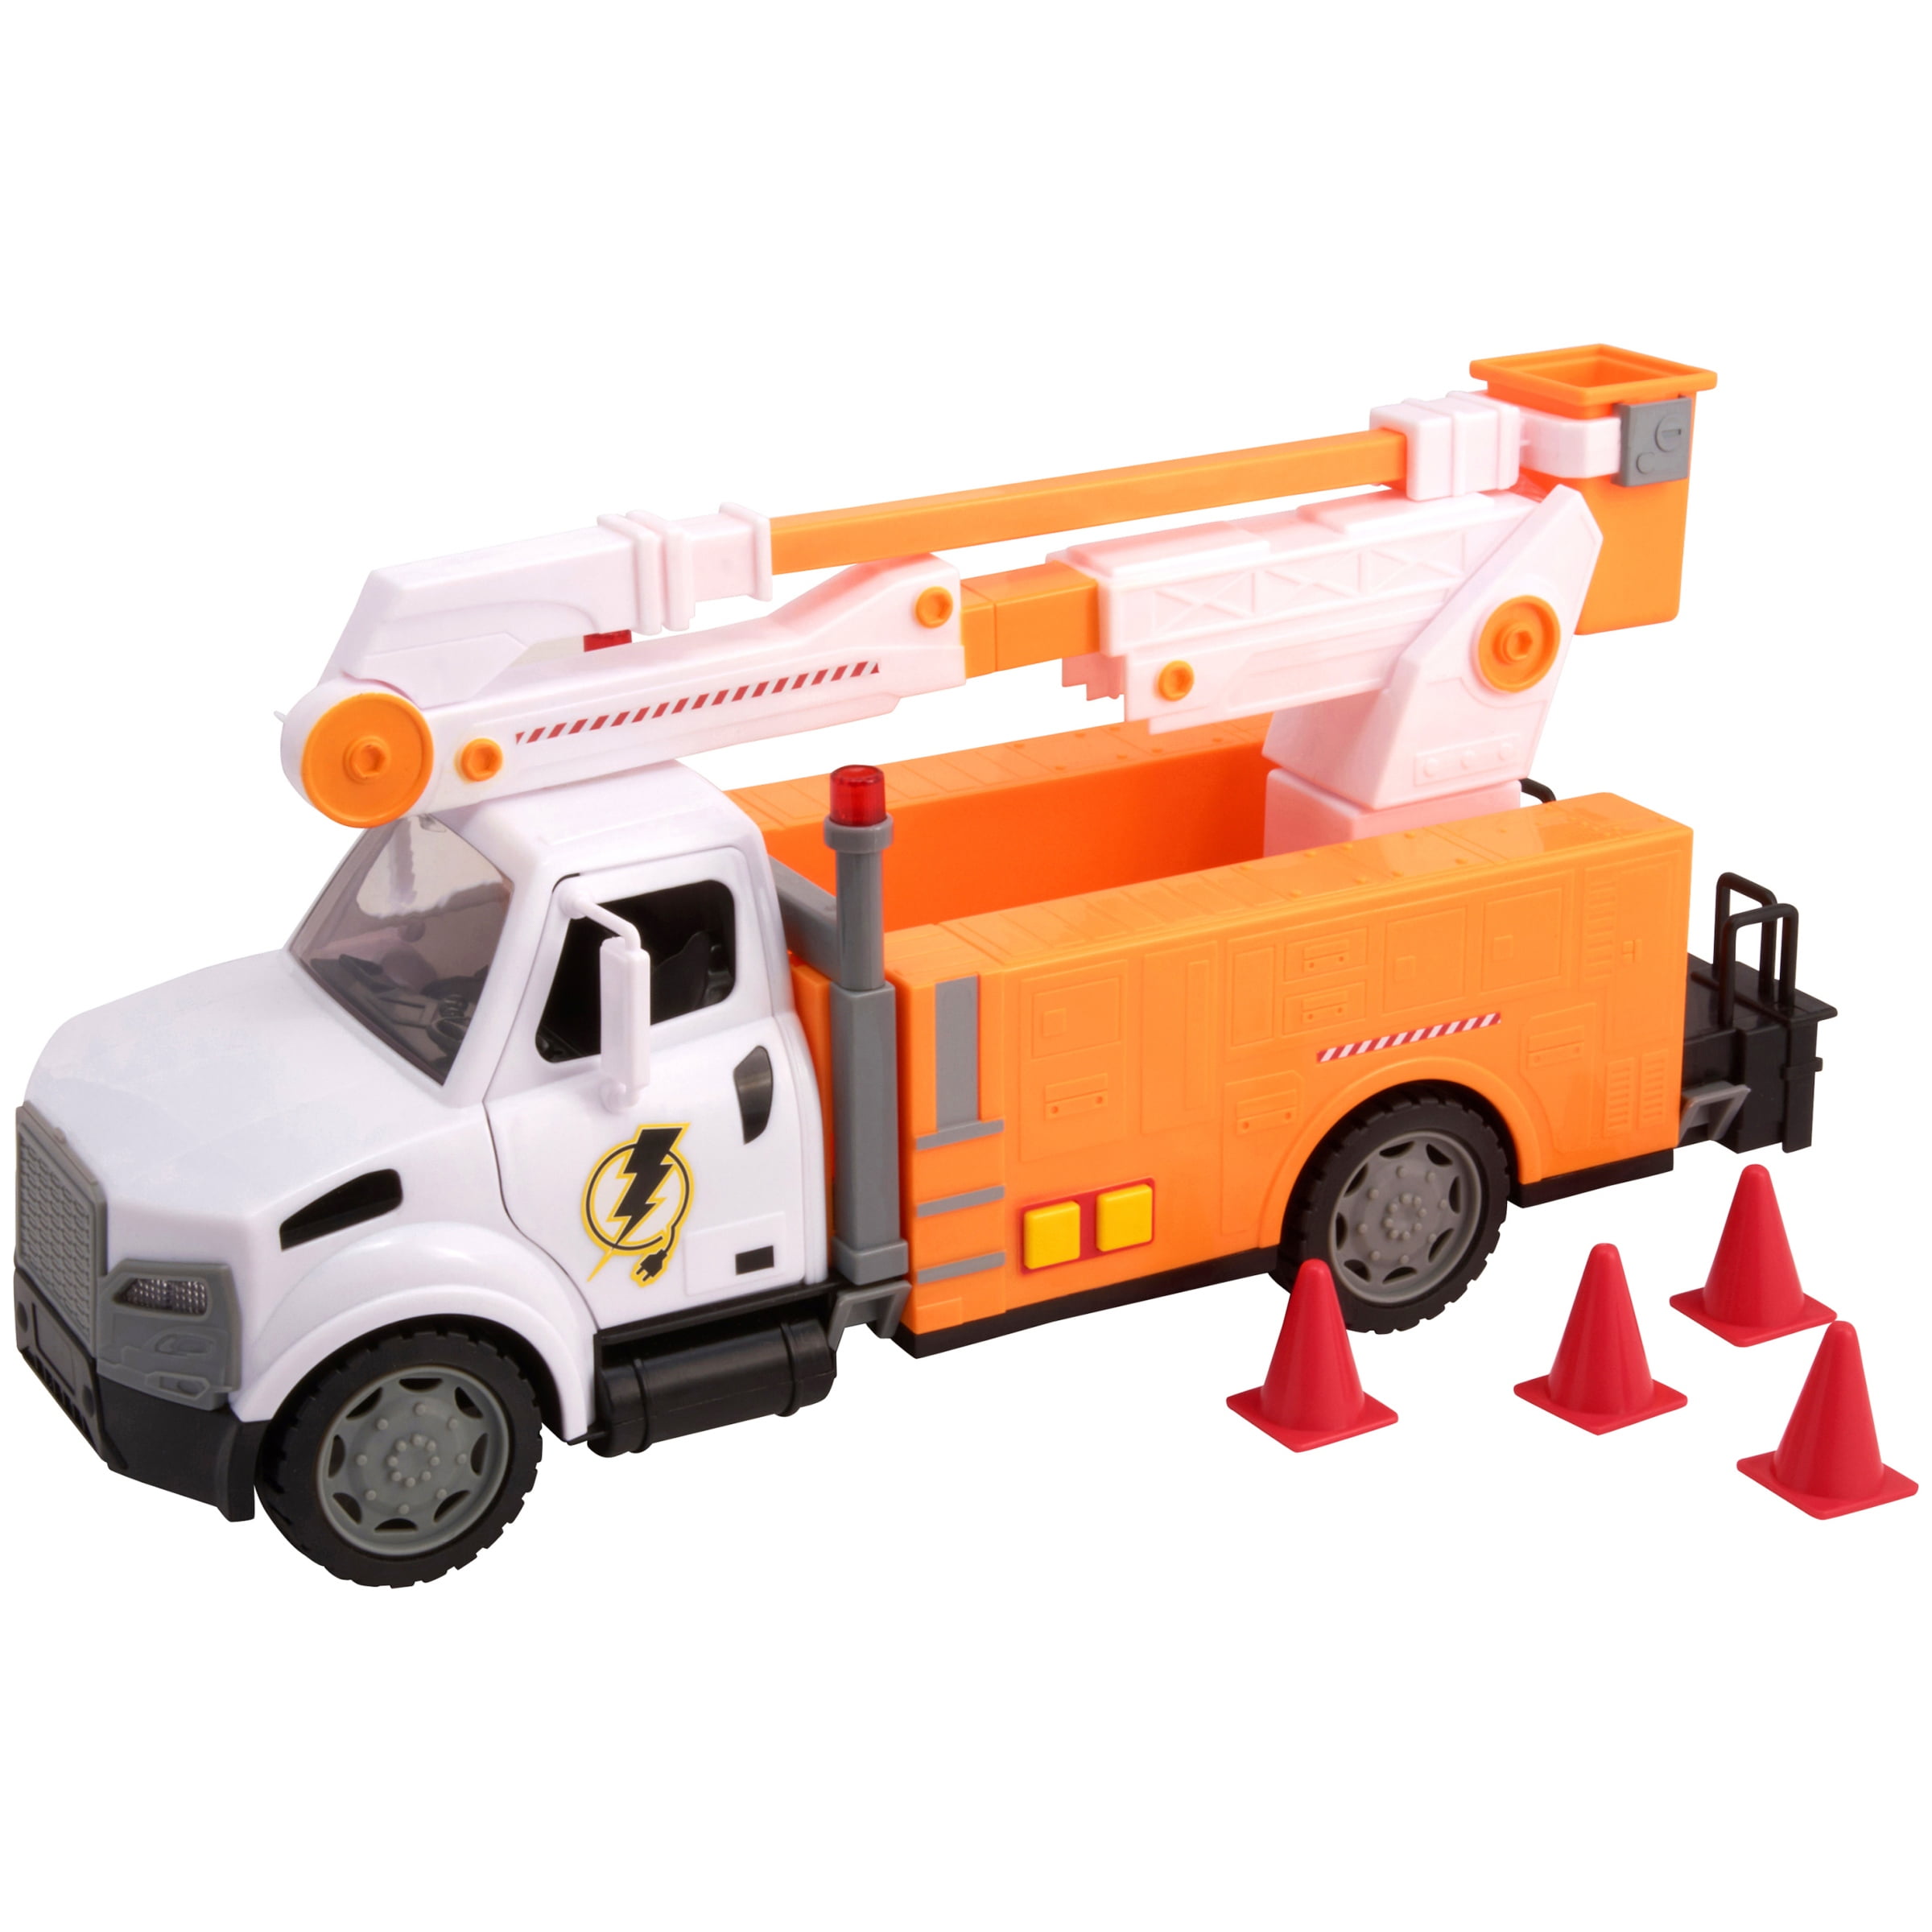 boom truck toy